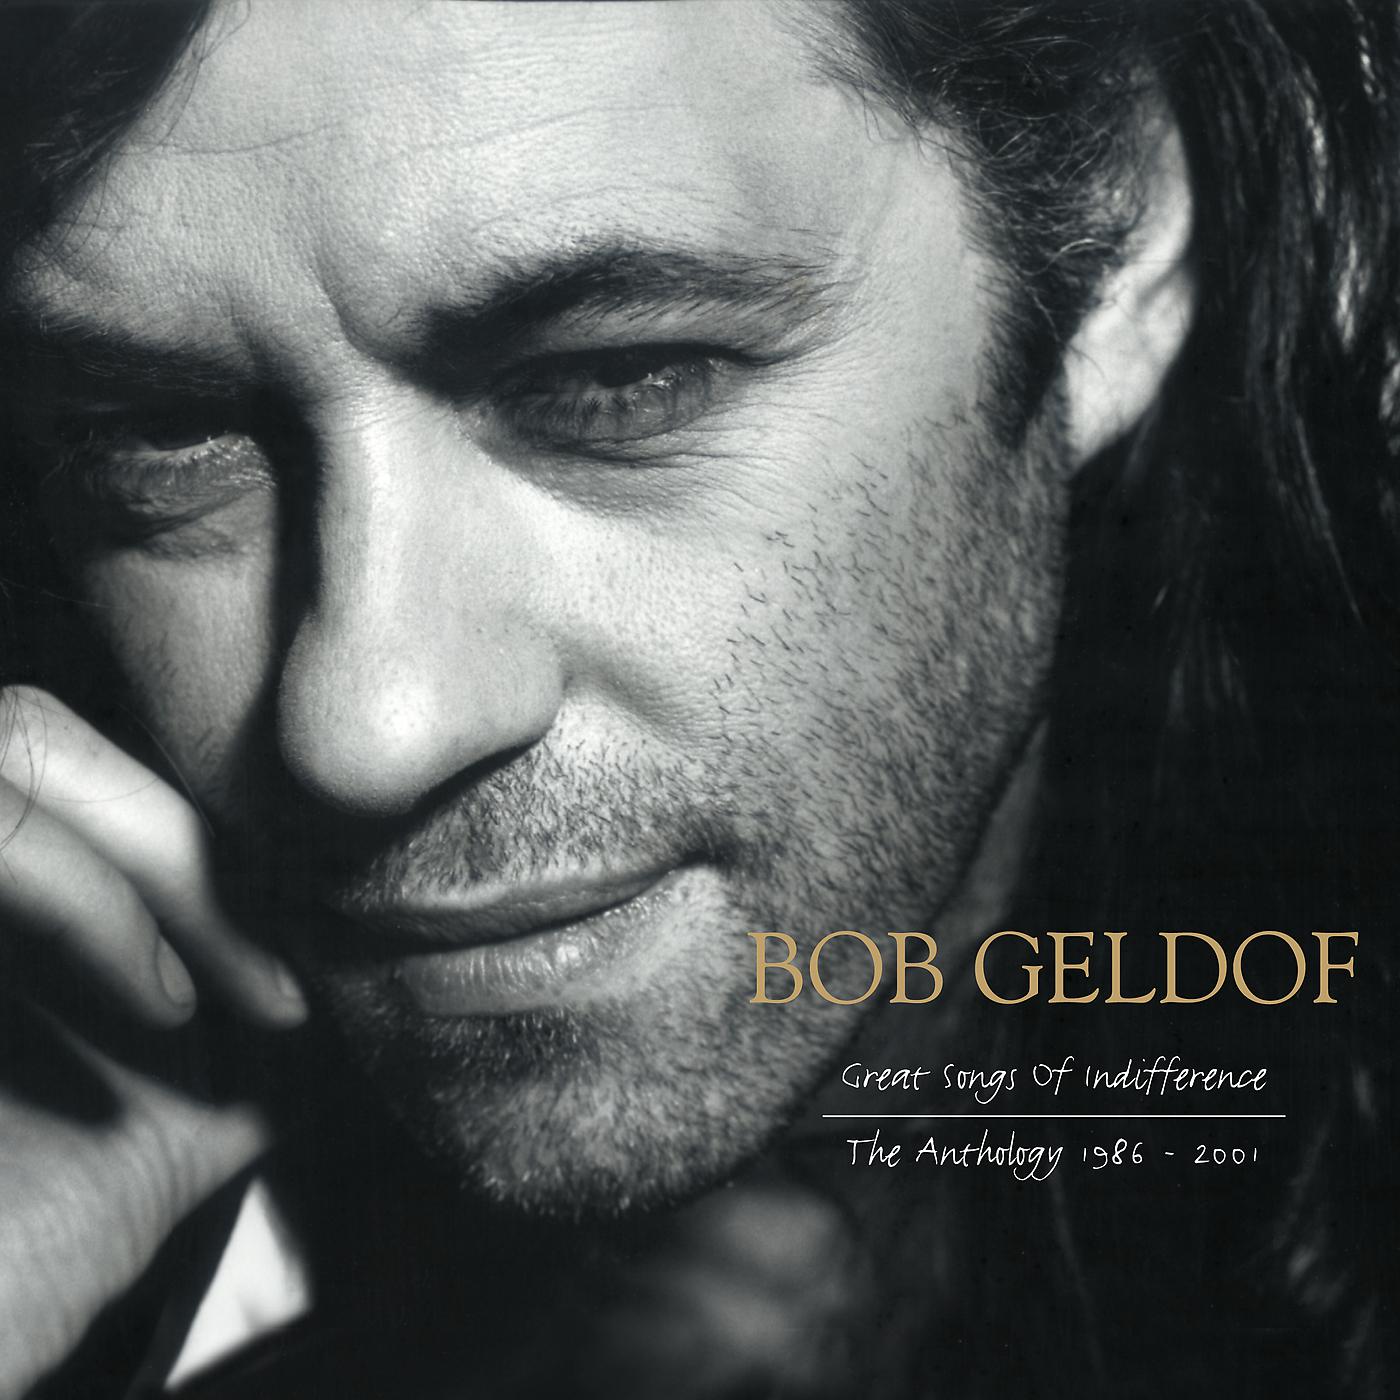 2001 1986. Bob Geldof 1986. Bob Geldof – Deep in the Heart of Nowhere. Музыкальный альбом 2001. Певец Боб.